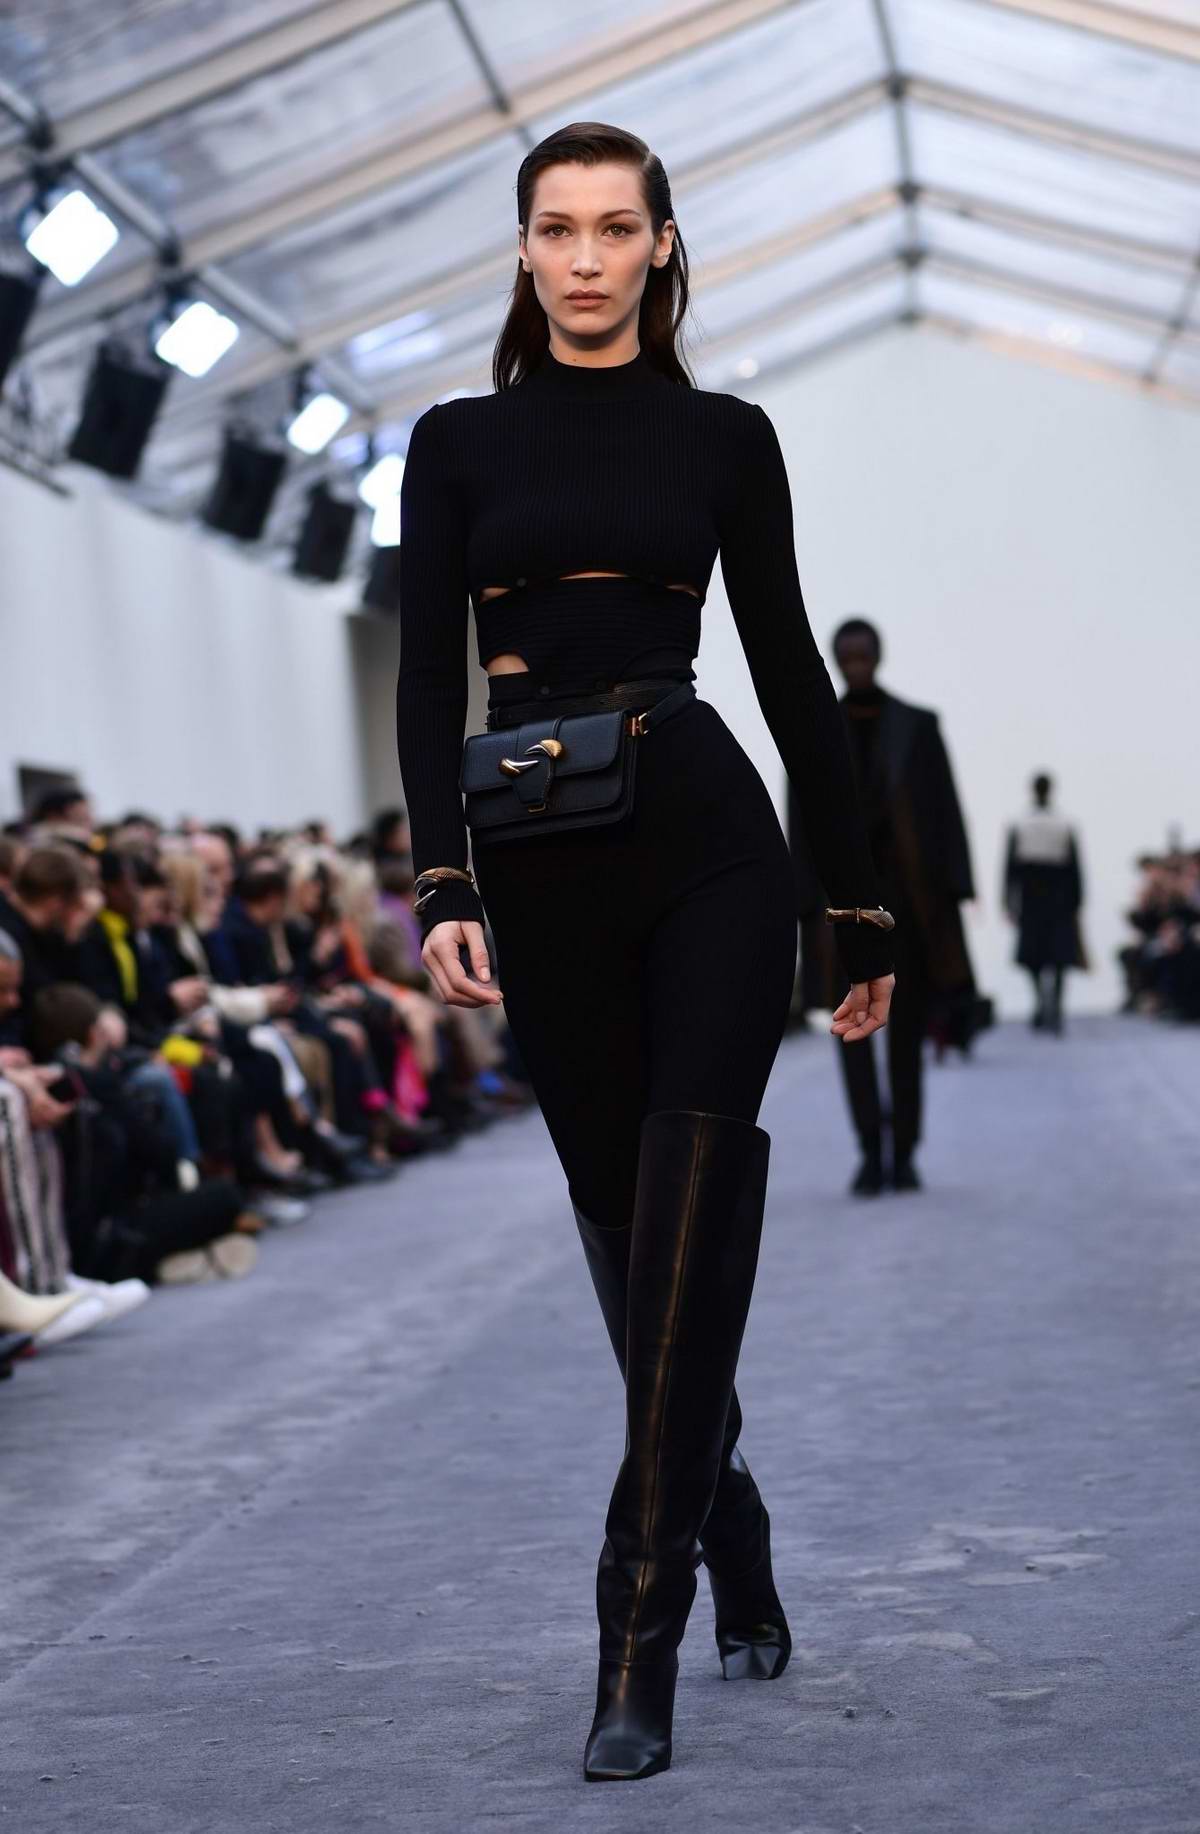 Bella Hadid Walks The Runway At The Roberto Cavalli Fashion Show During Milan Fashion Week In